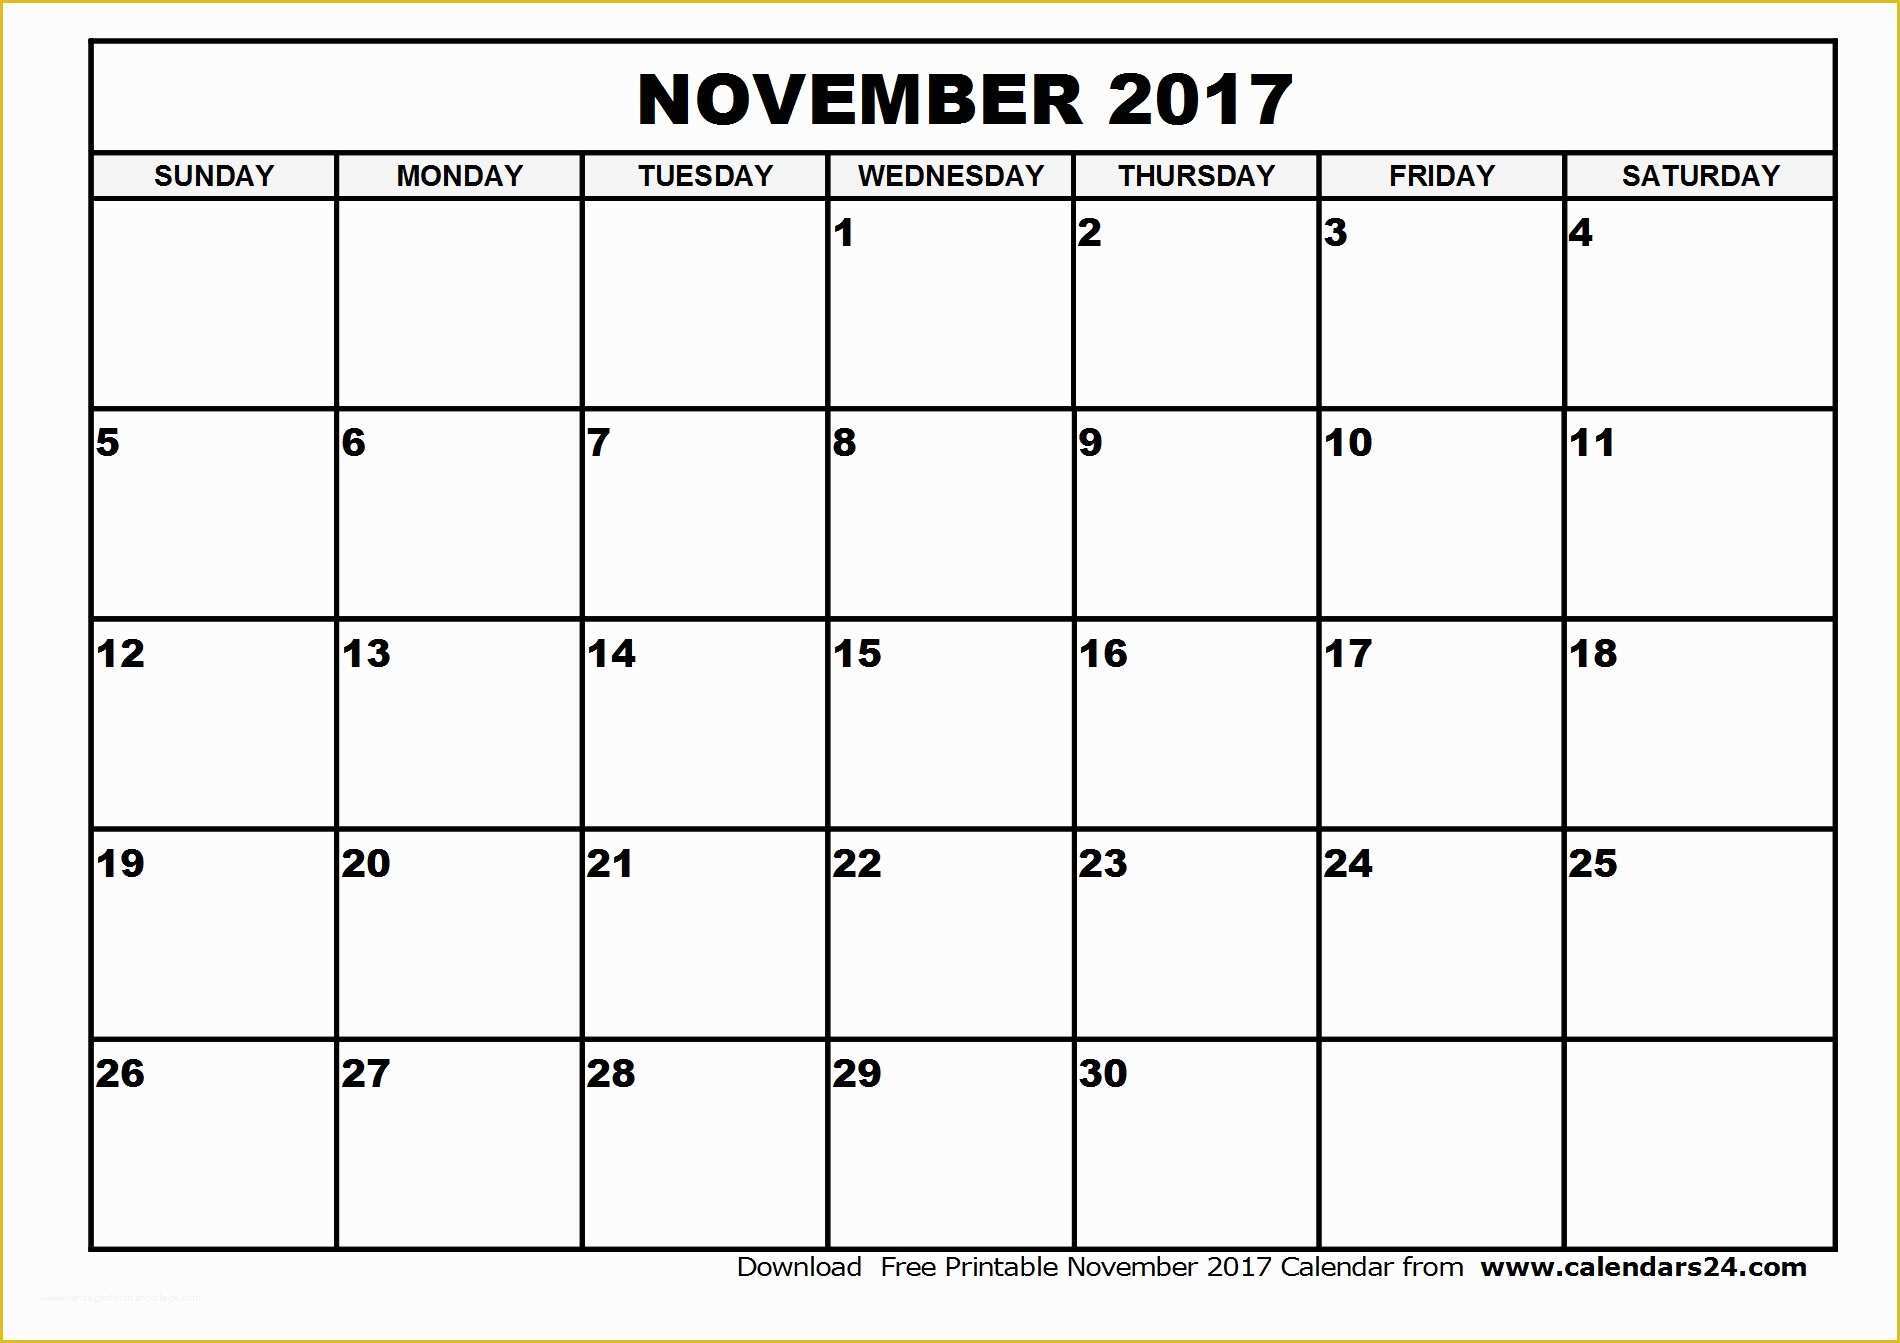 Free Calendar Template 2017 November Of November 2017 Calendar & December 2017 Calendar